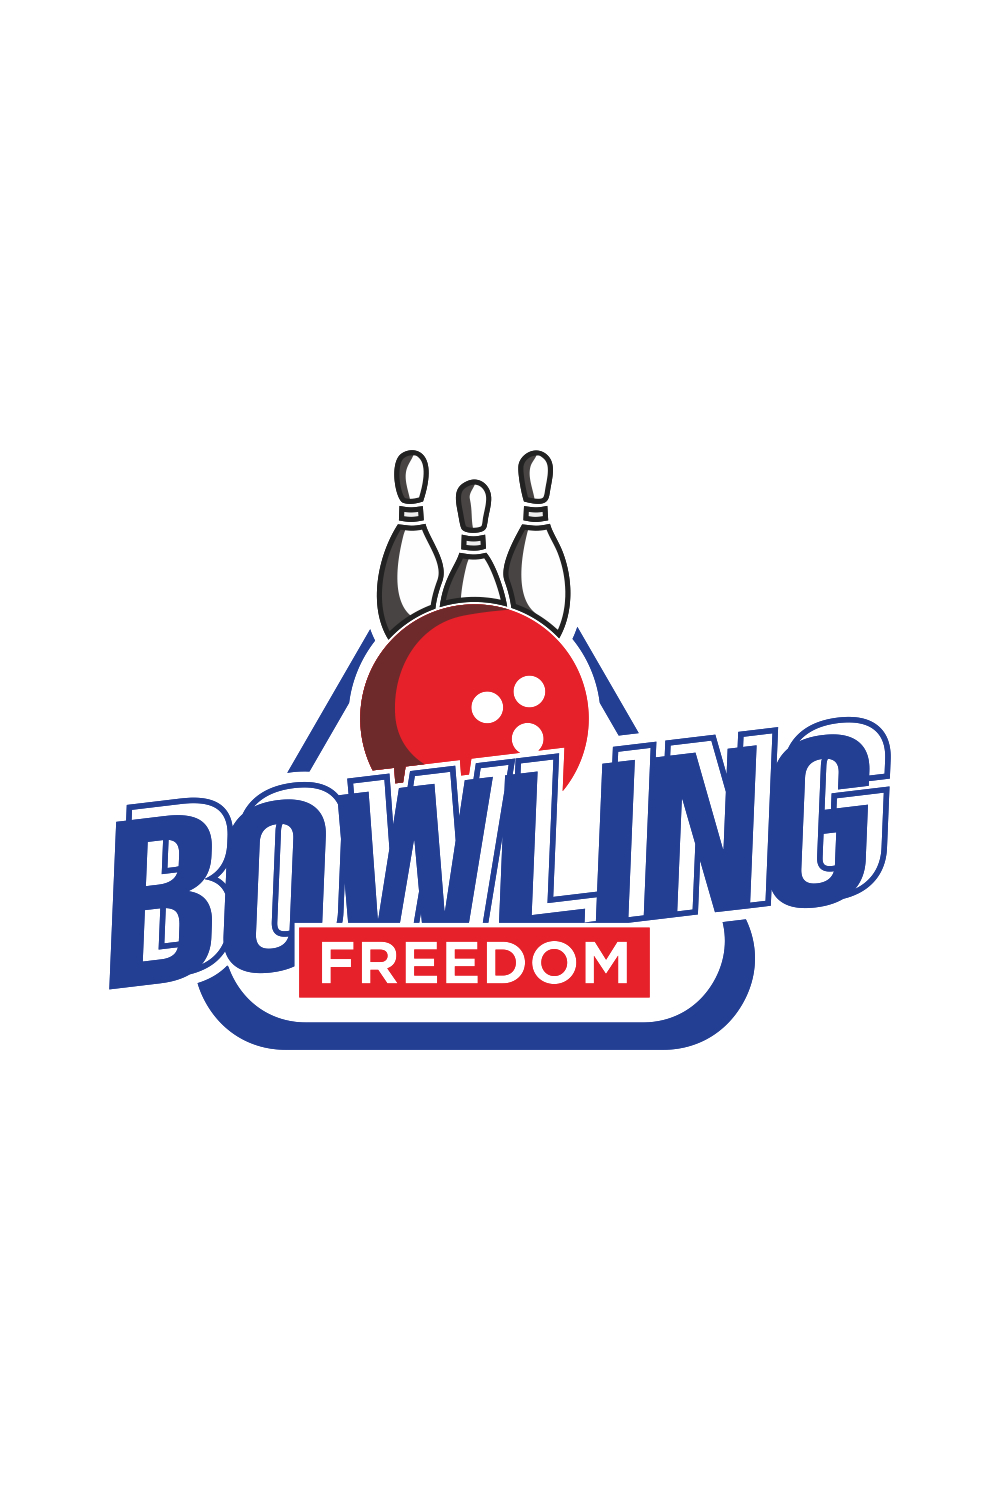 Bowling logo sport, bowling vector illustration pinterest preview image.